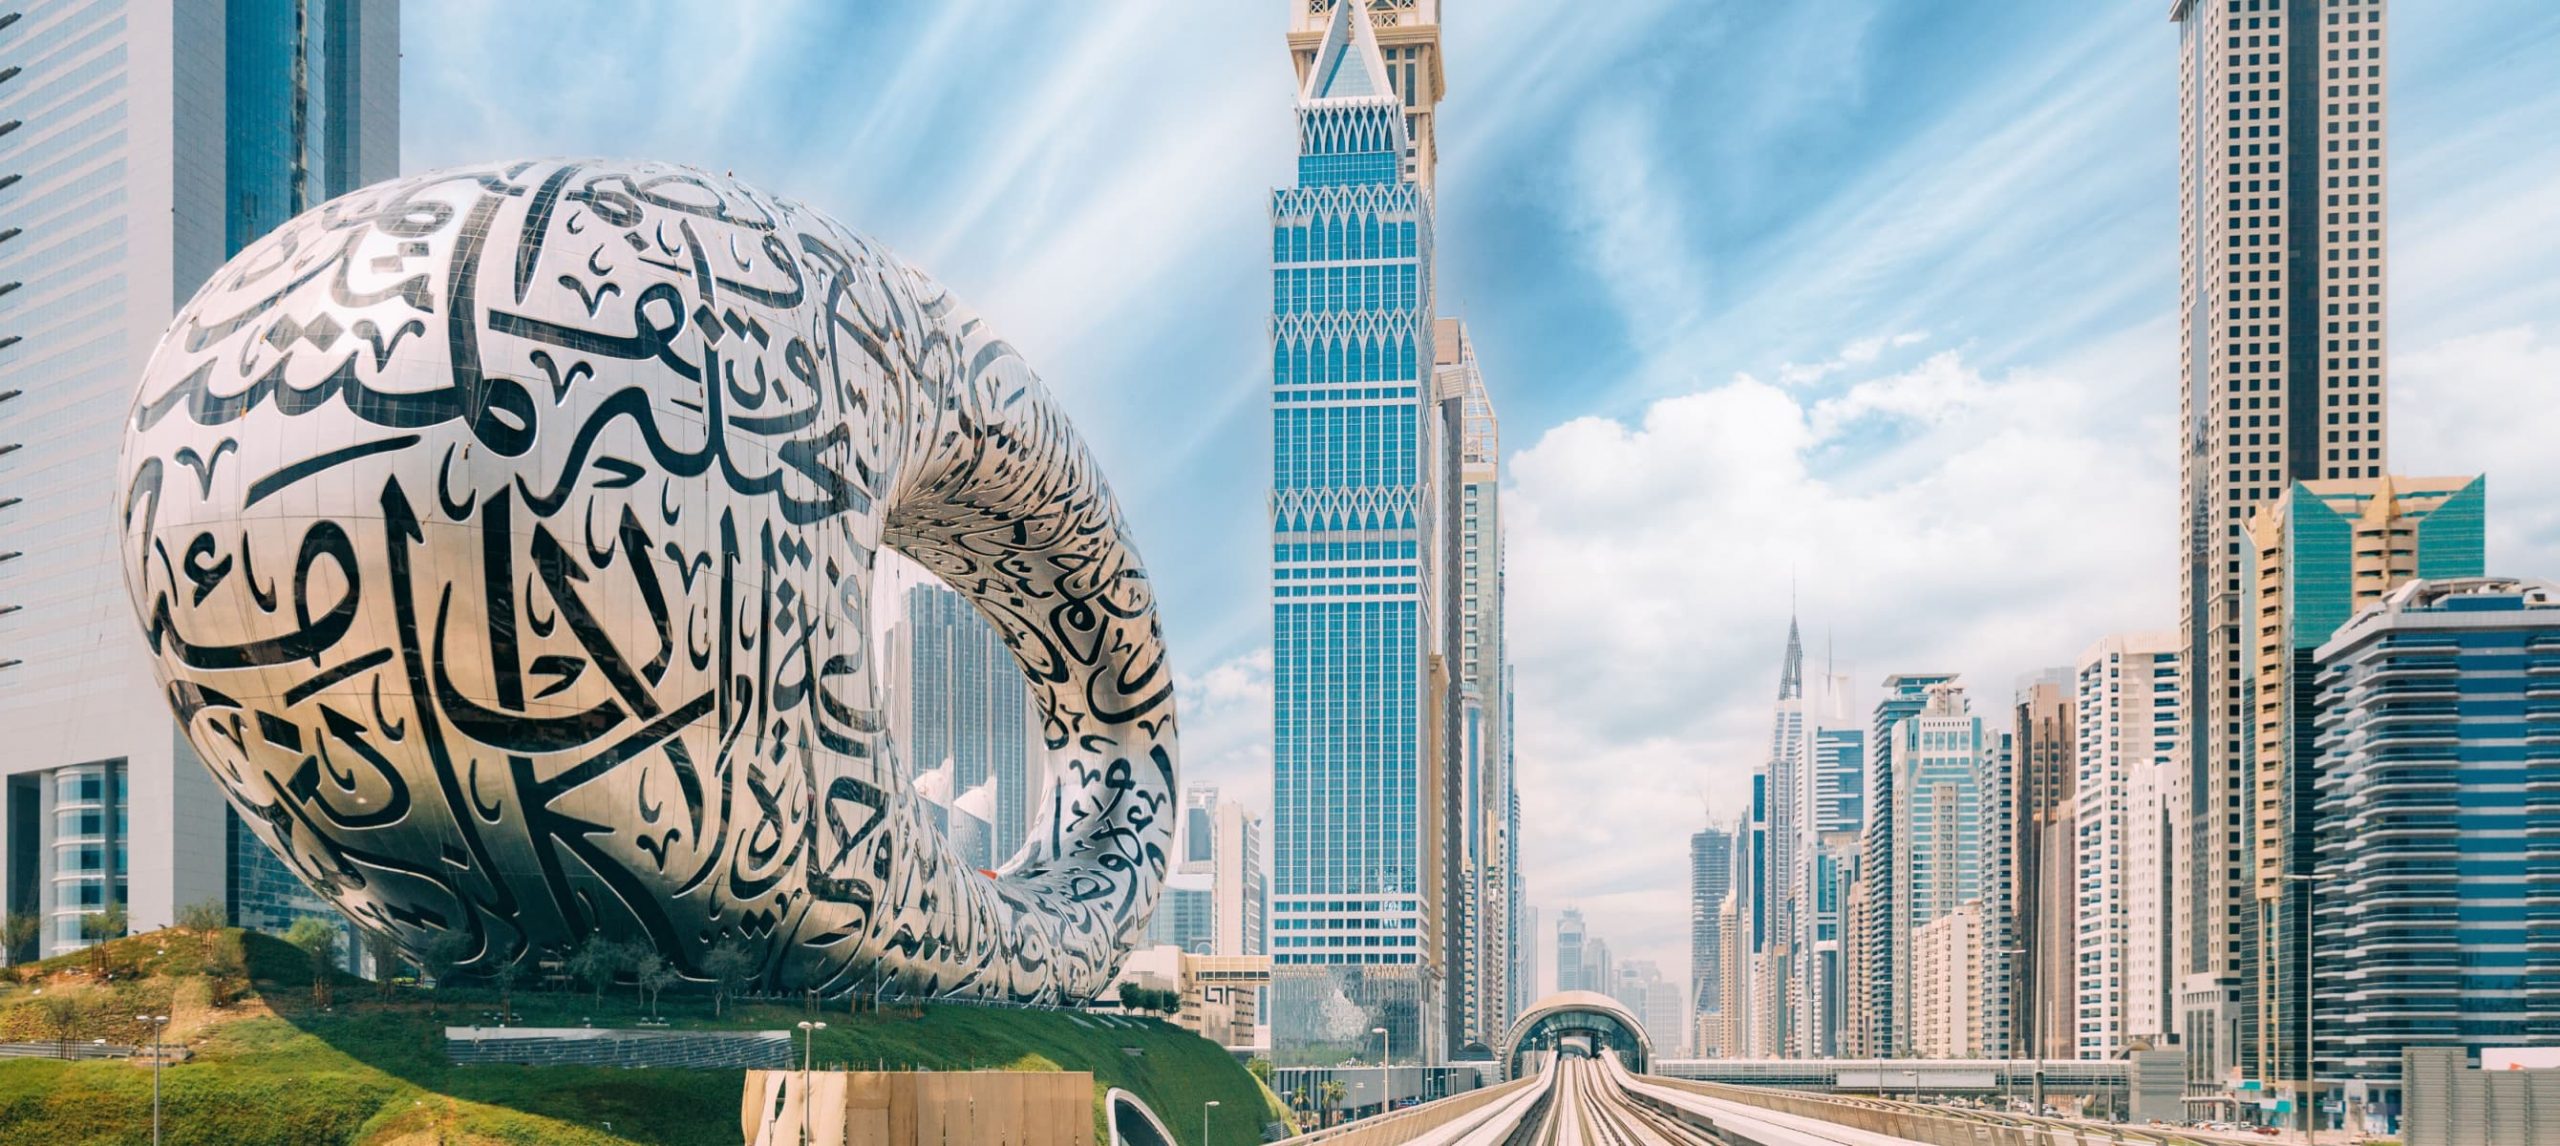 8 Most Fascinating Dubai Museums